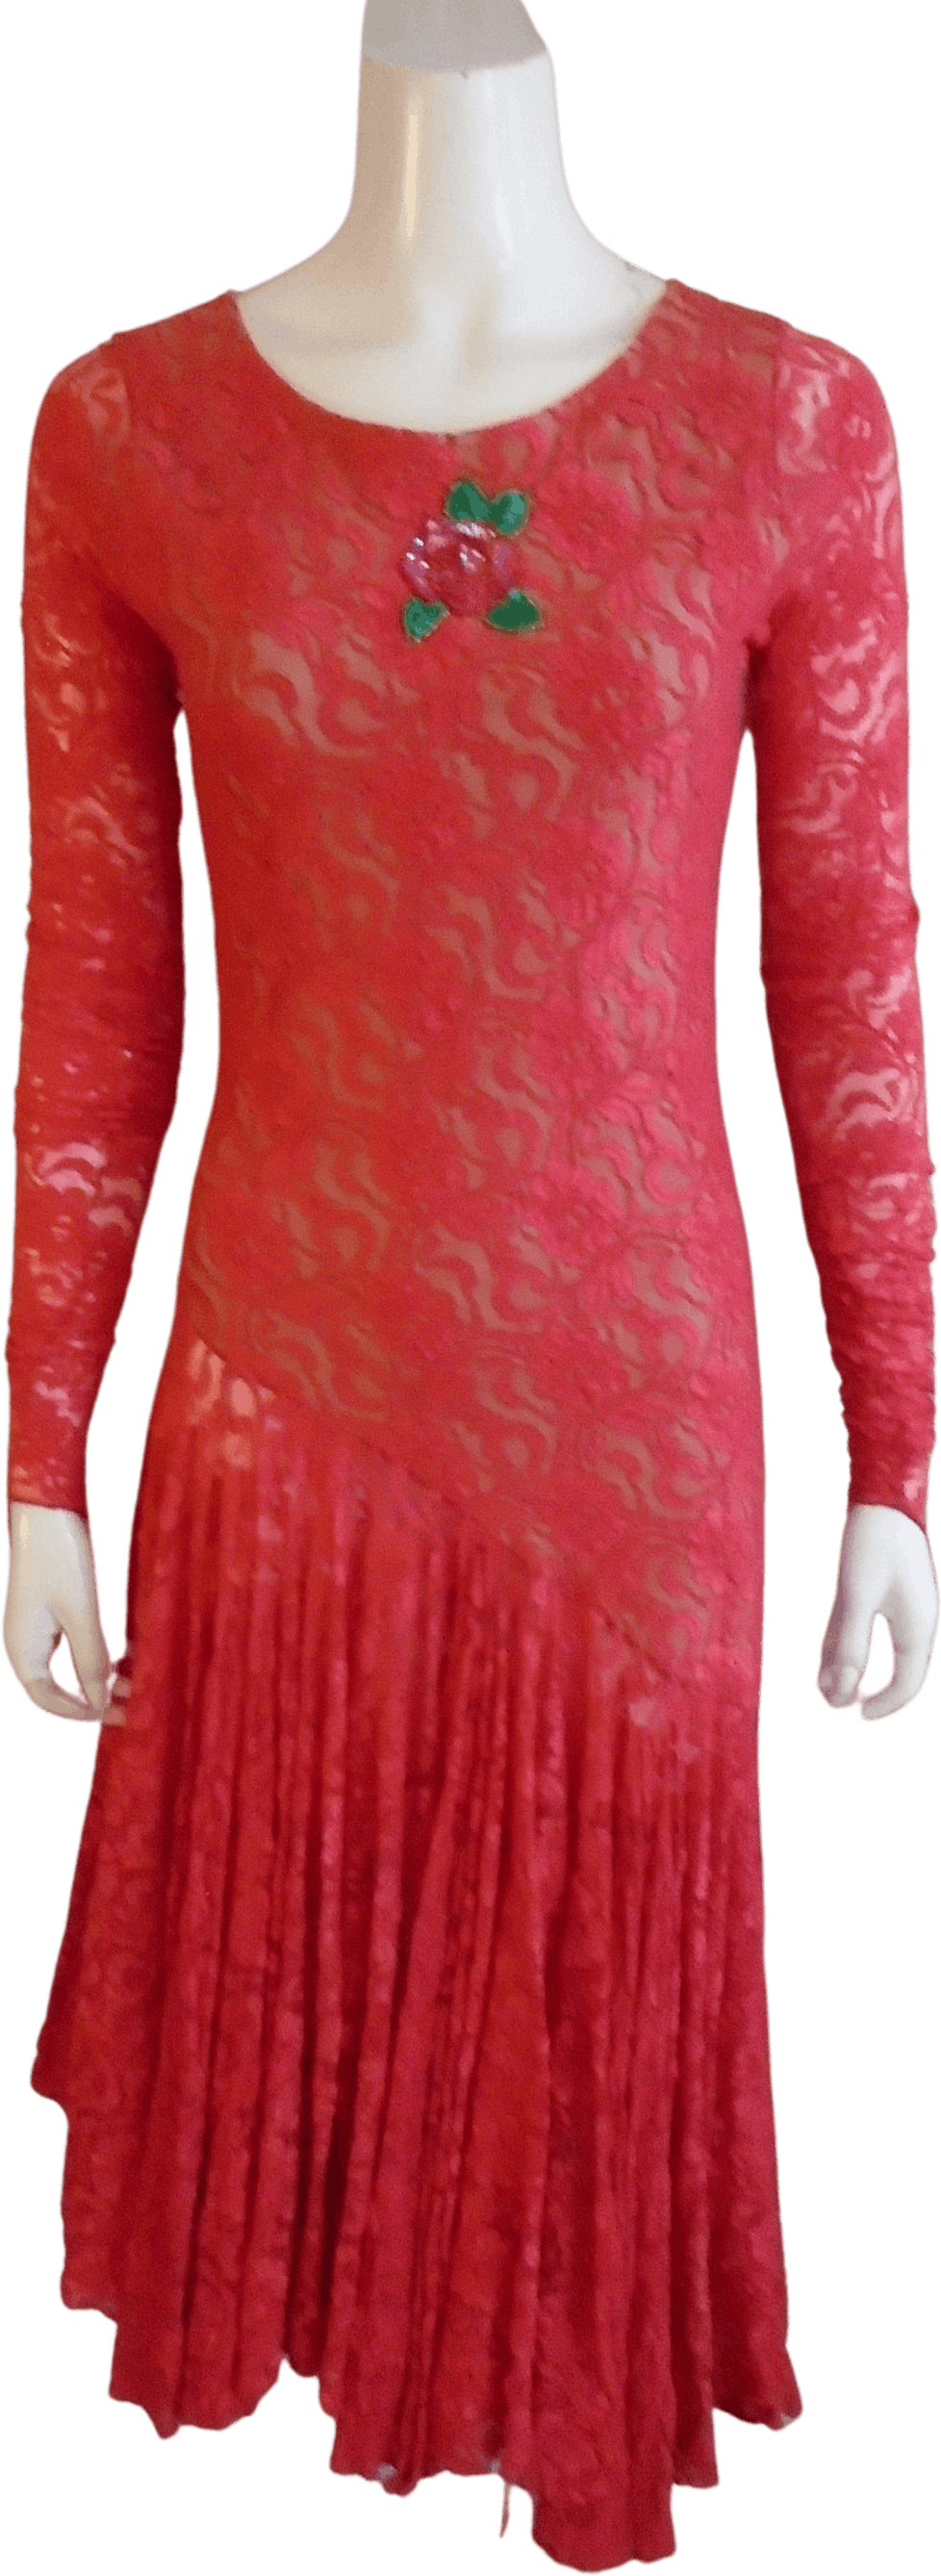 Vintage 80’s Red Lace Long Sleeve Sequin Floral Detail Dress | Shop ...